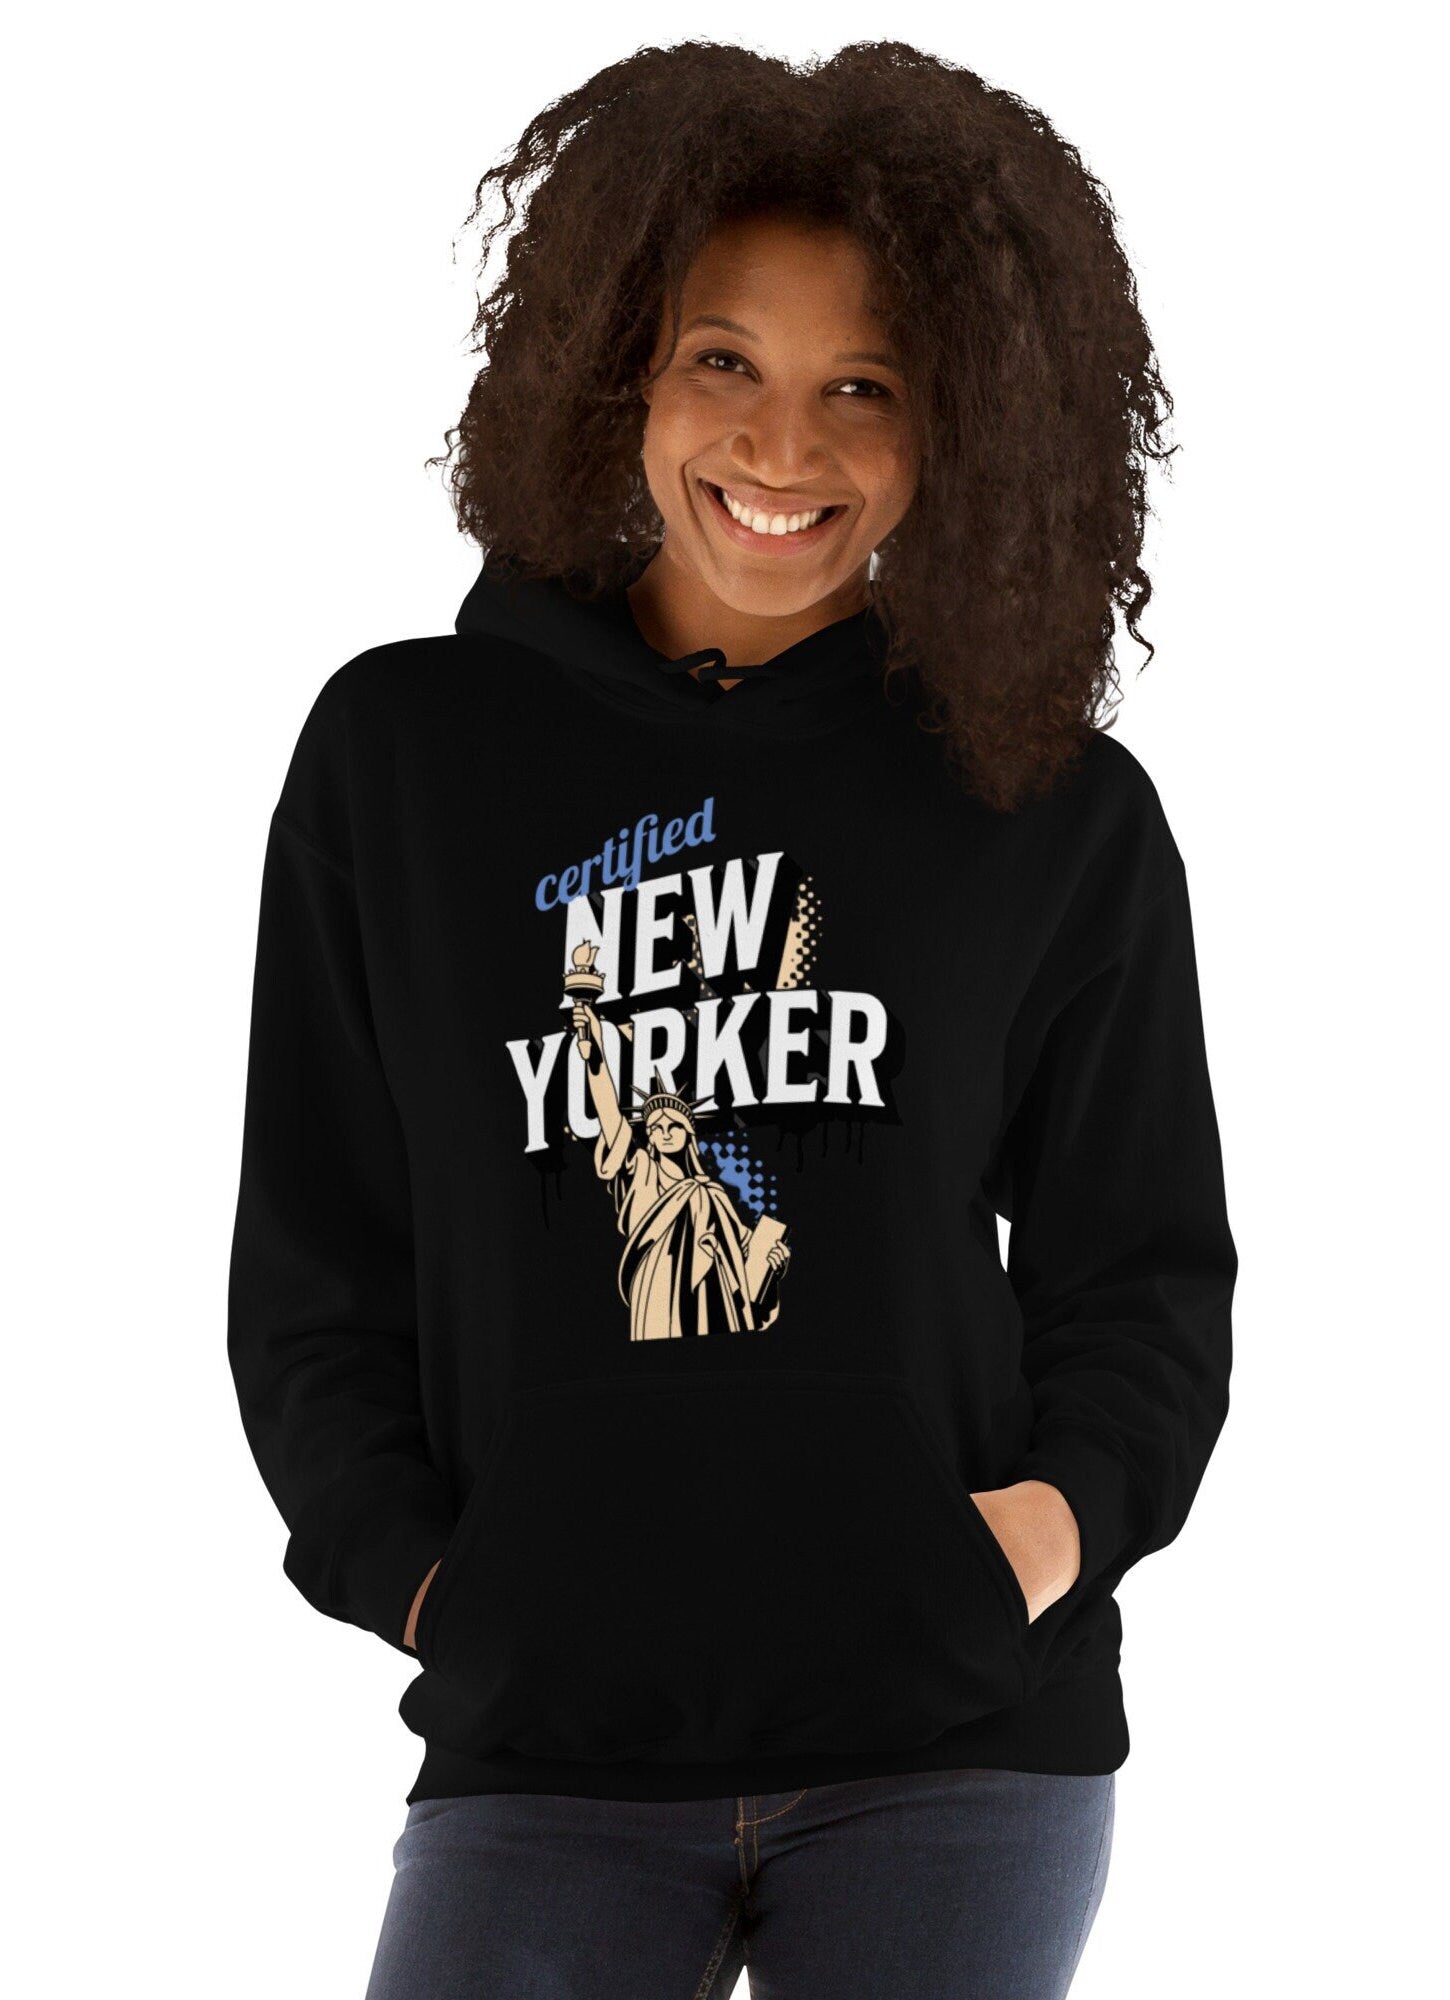 New York Sweatshirt, New York Sweater, New York Lover Gift, Vintage Sweatshirt, New York Crewneck, New York City Hoodie